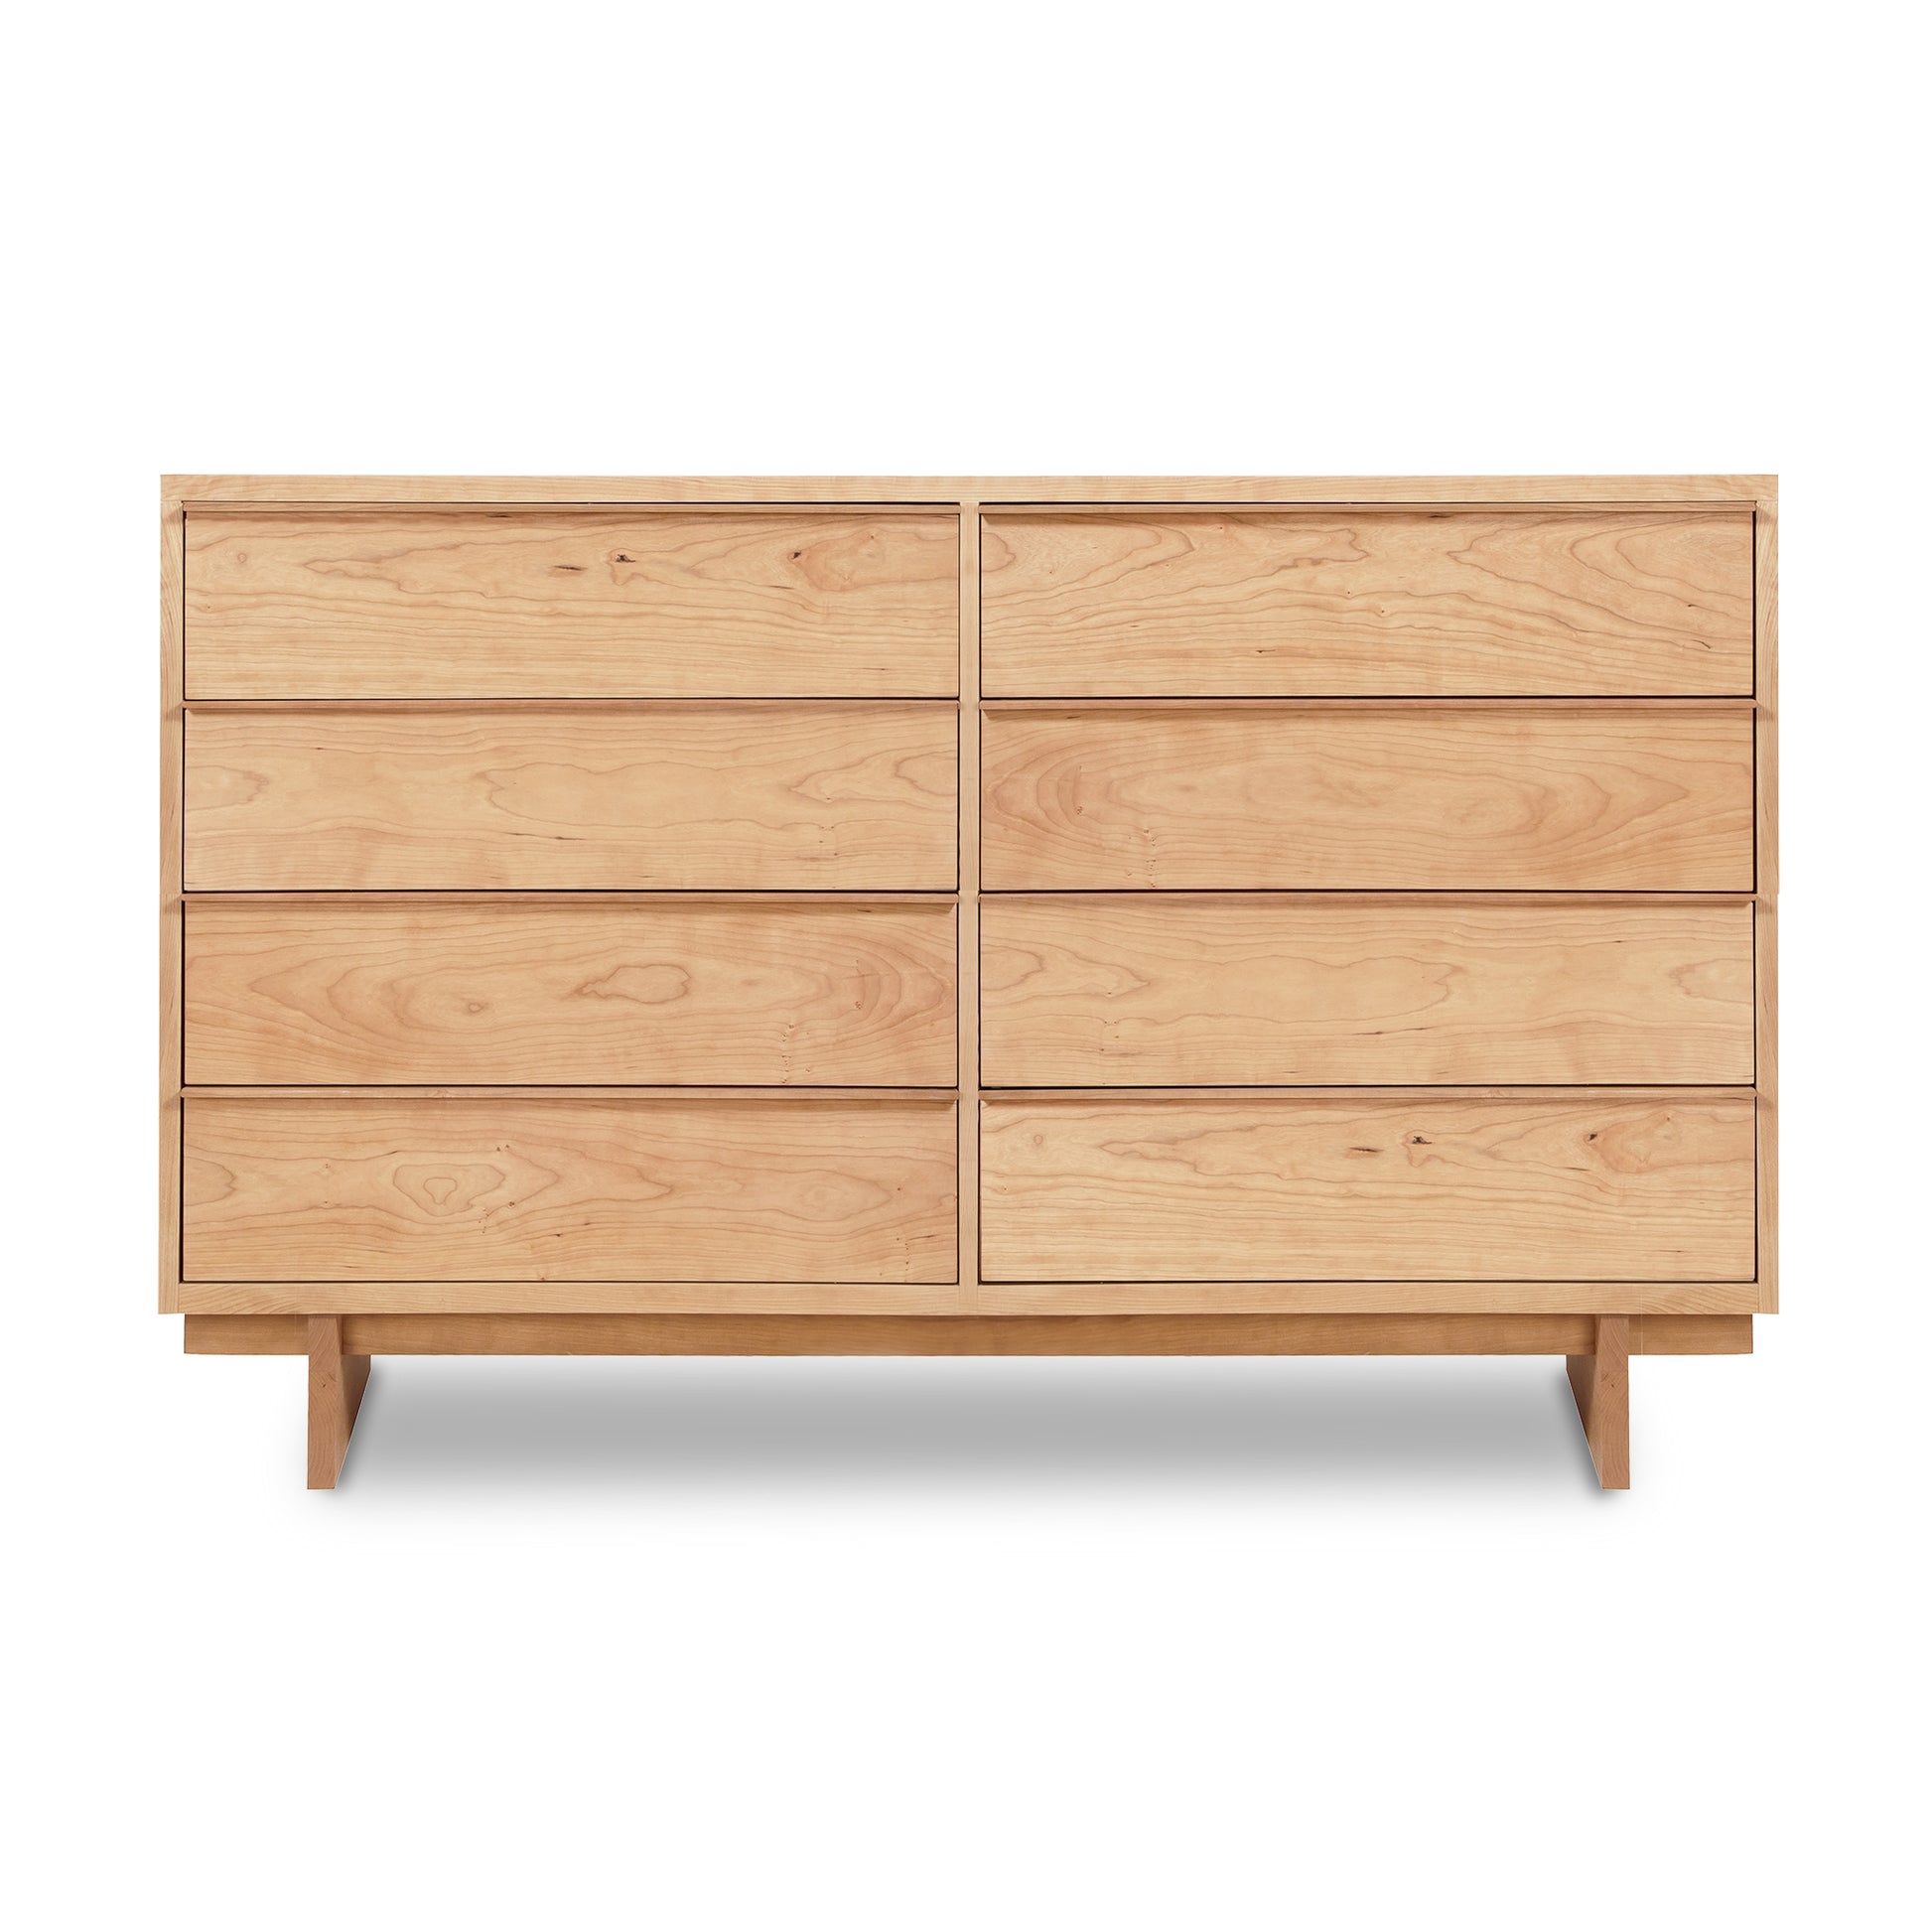 A Vermont Furniture Designs Kipling 8-Drawer Dresser on a plain background.